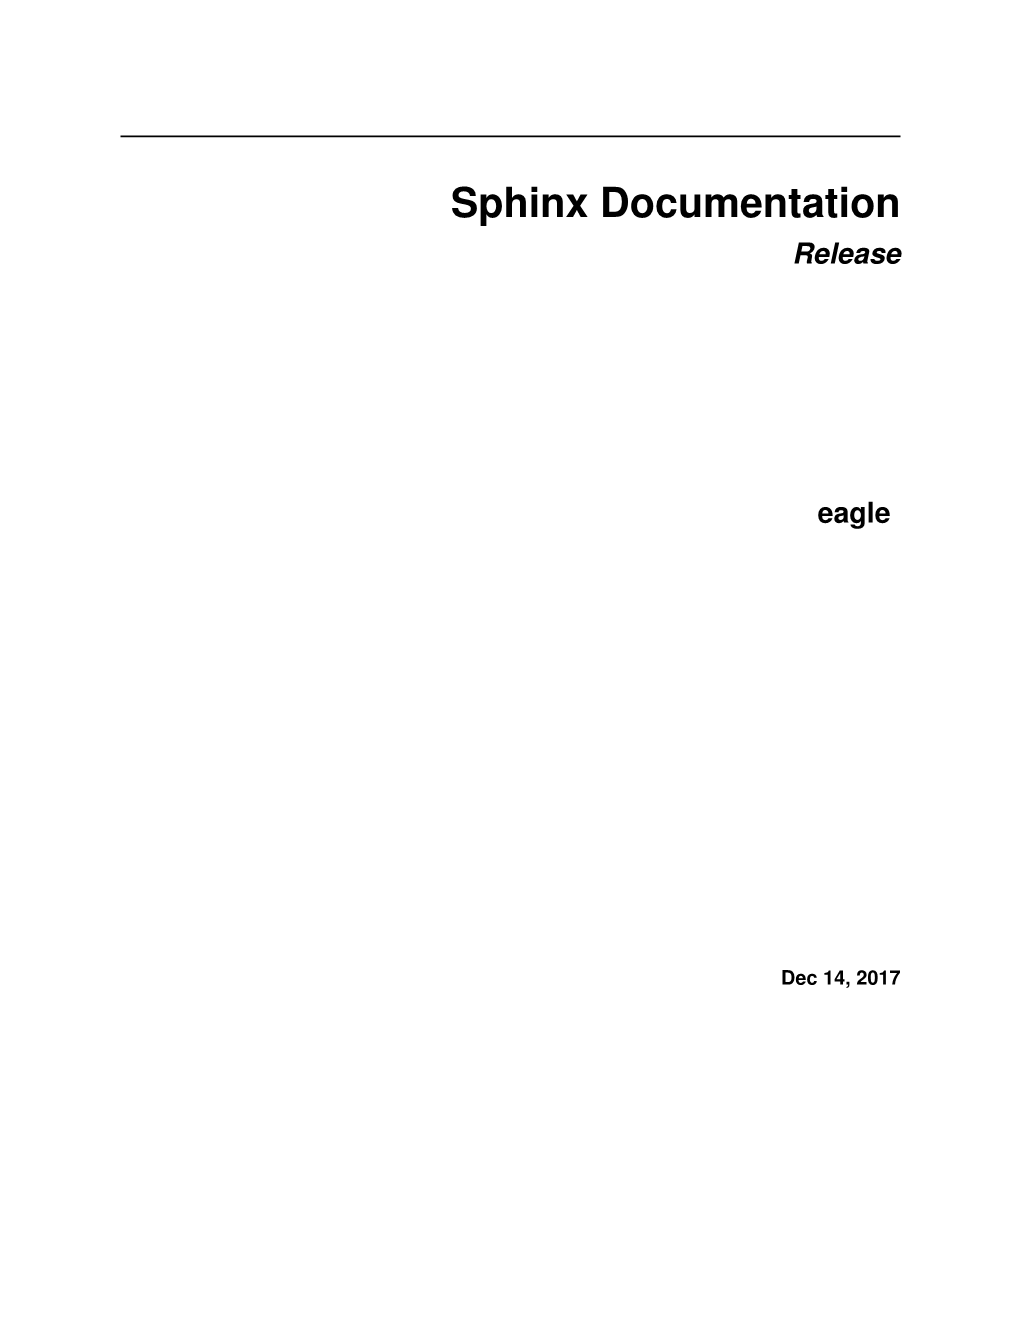 Sphinx Documentation Release